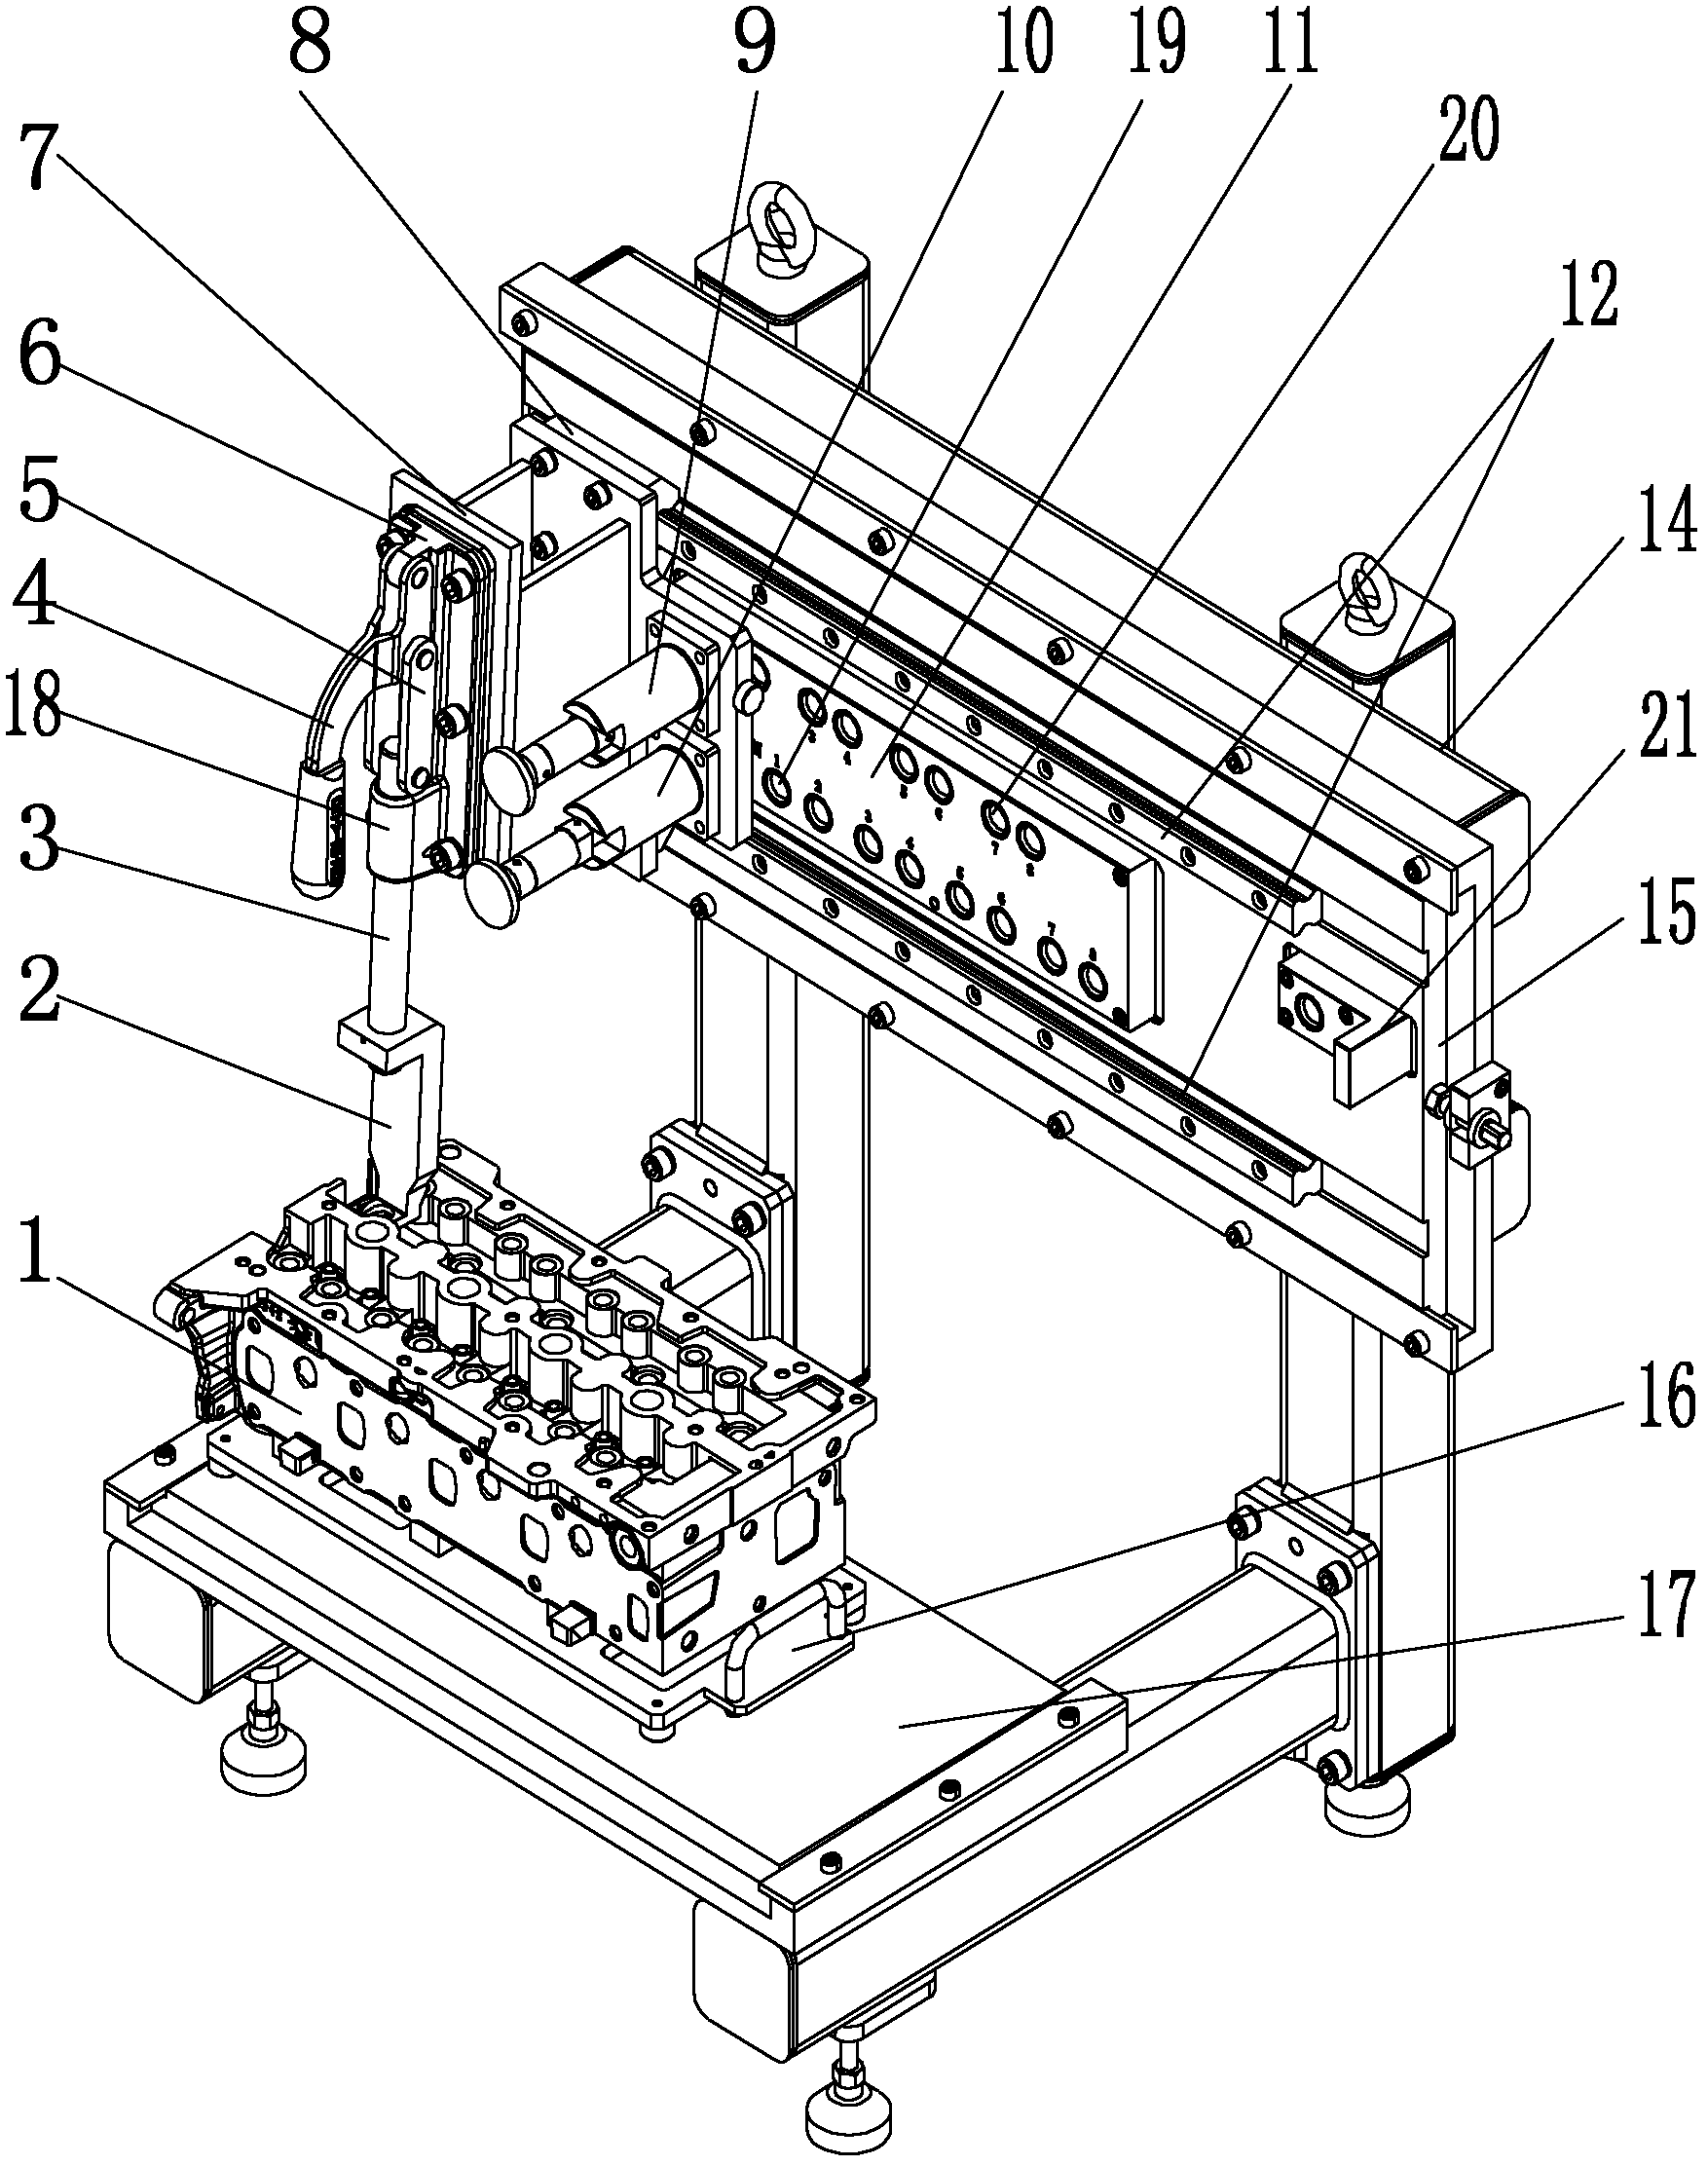 Assembly tooling for diesel engine valve collet